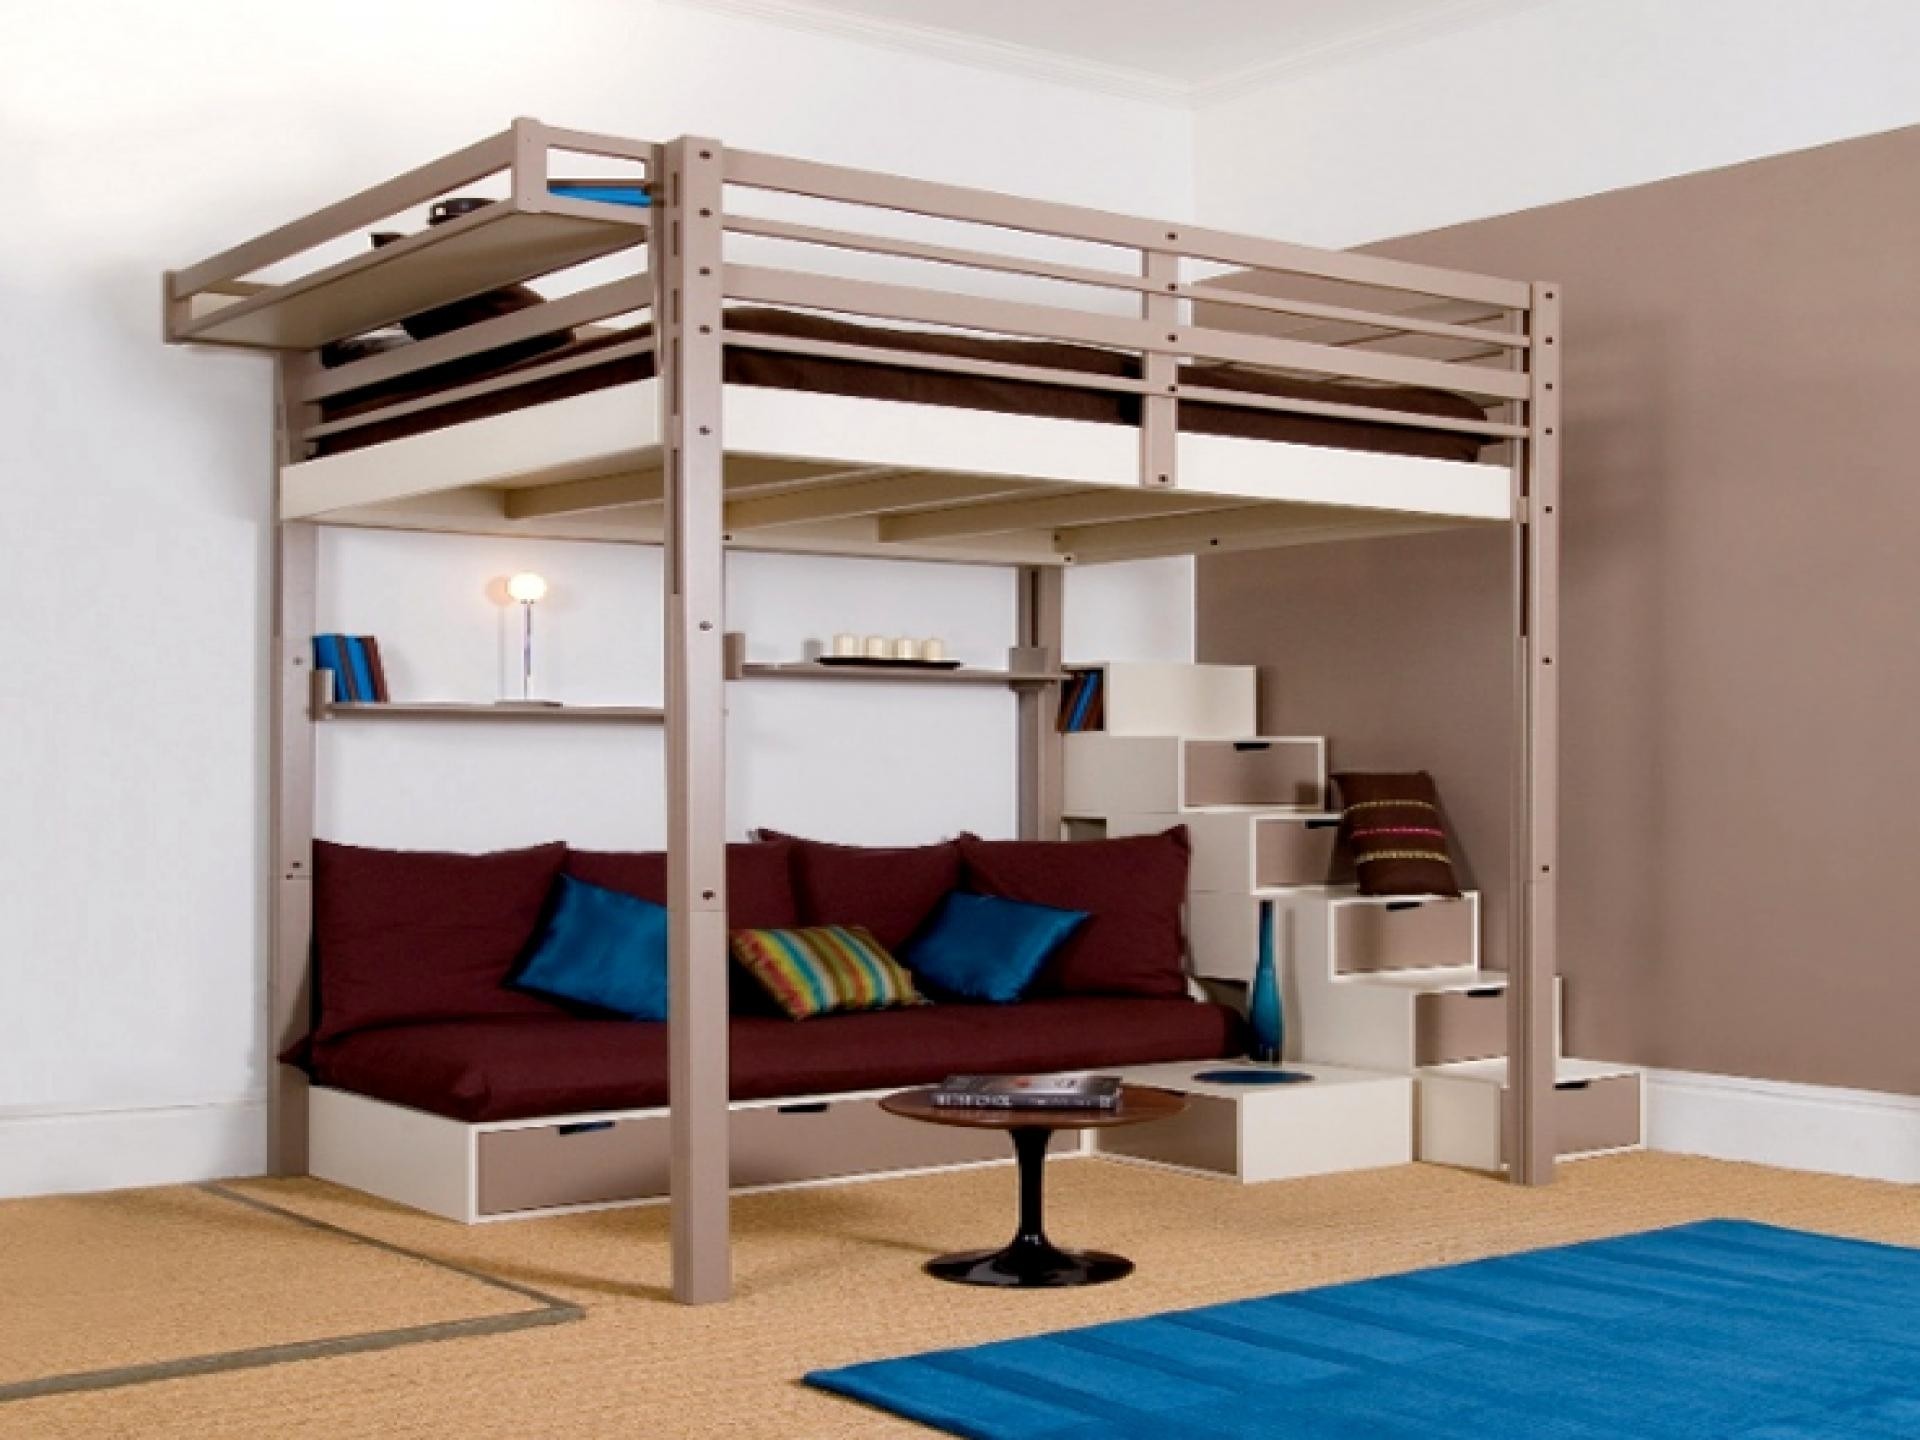 20 photos bunk bed with sofas underneath sofa ideas 2